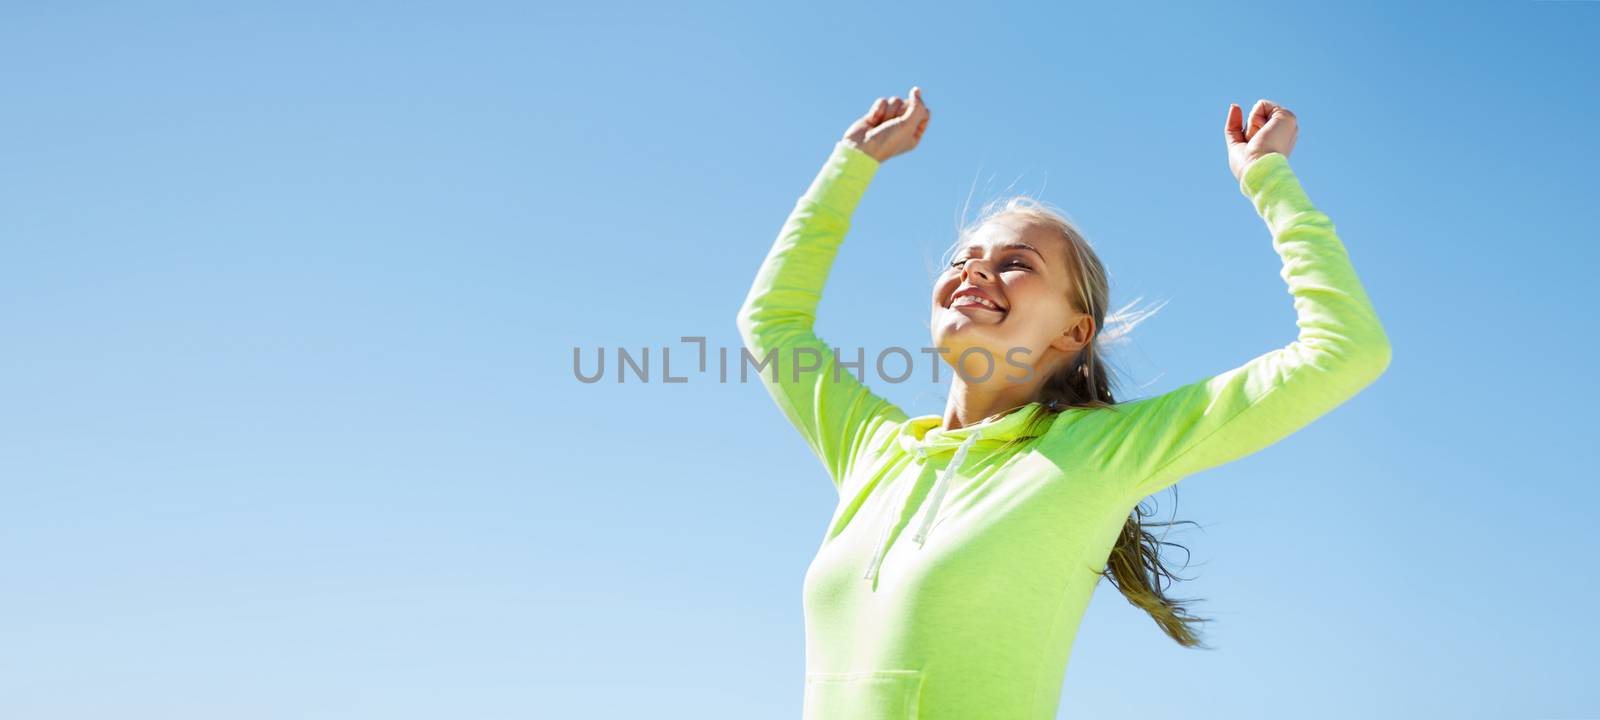 woman runner celebrating victory by dolgachov